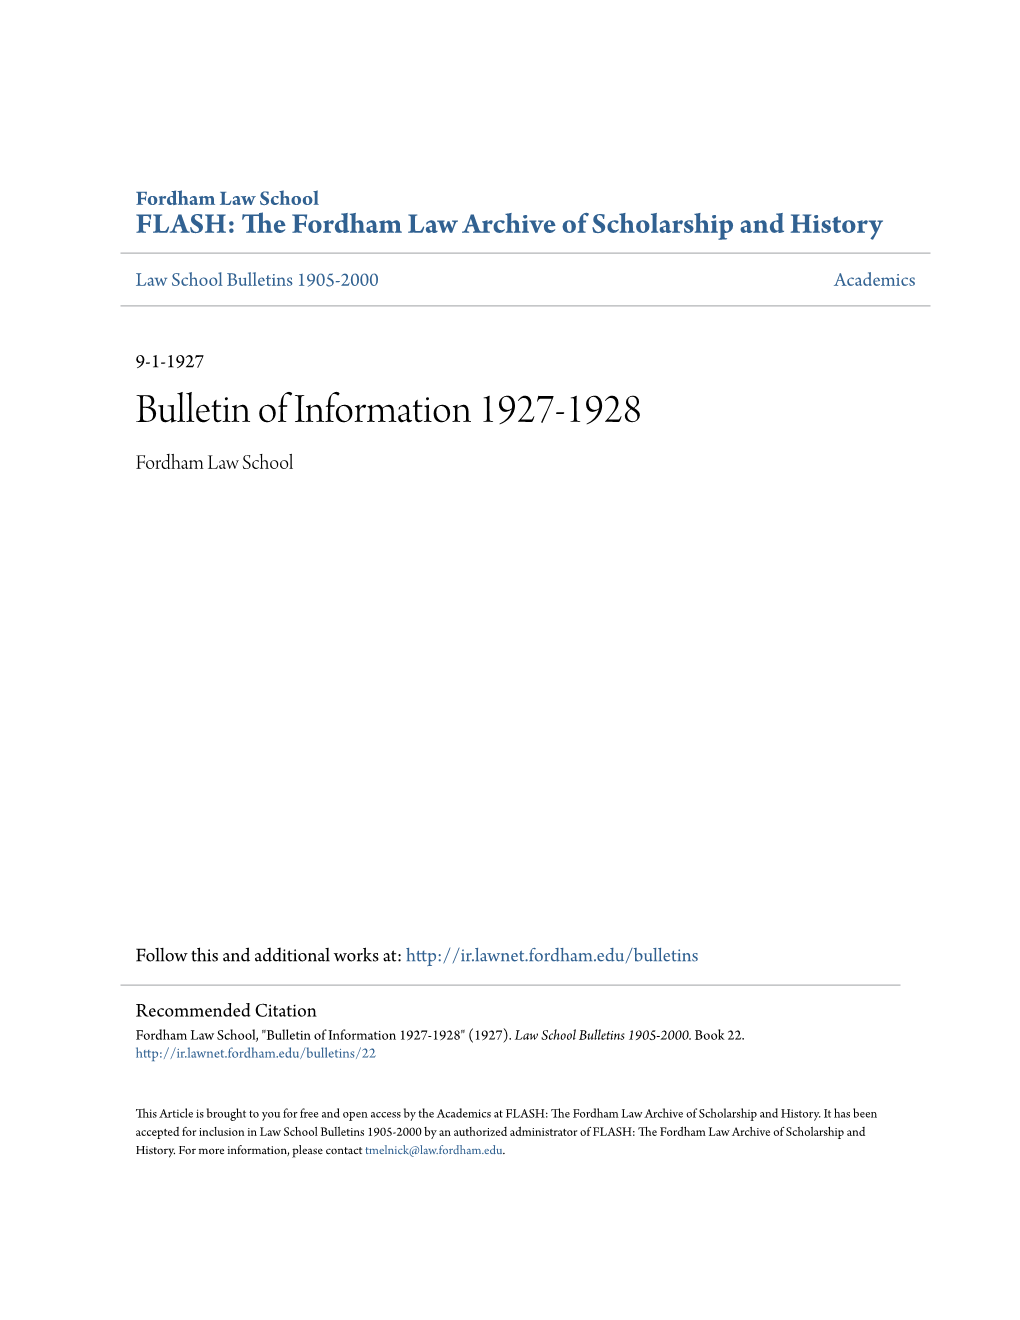 Bulletin of Information 1927-1928 Fordham Law School